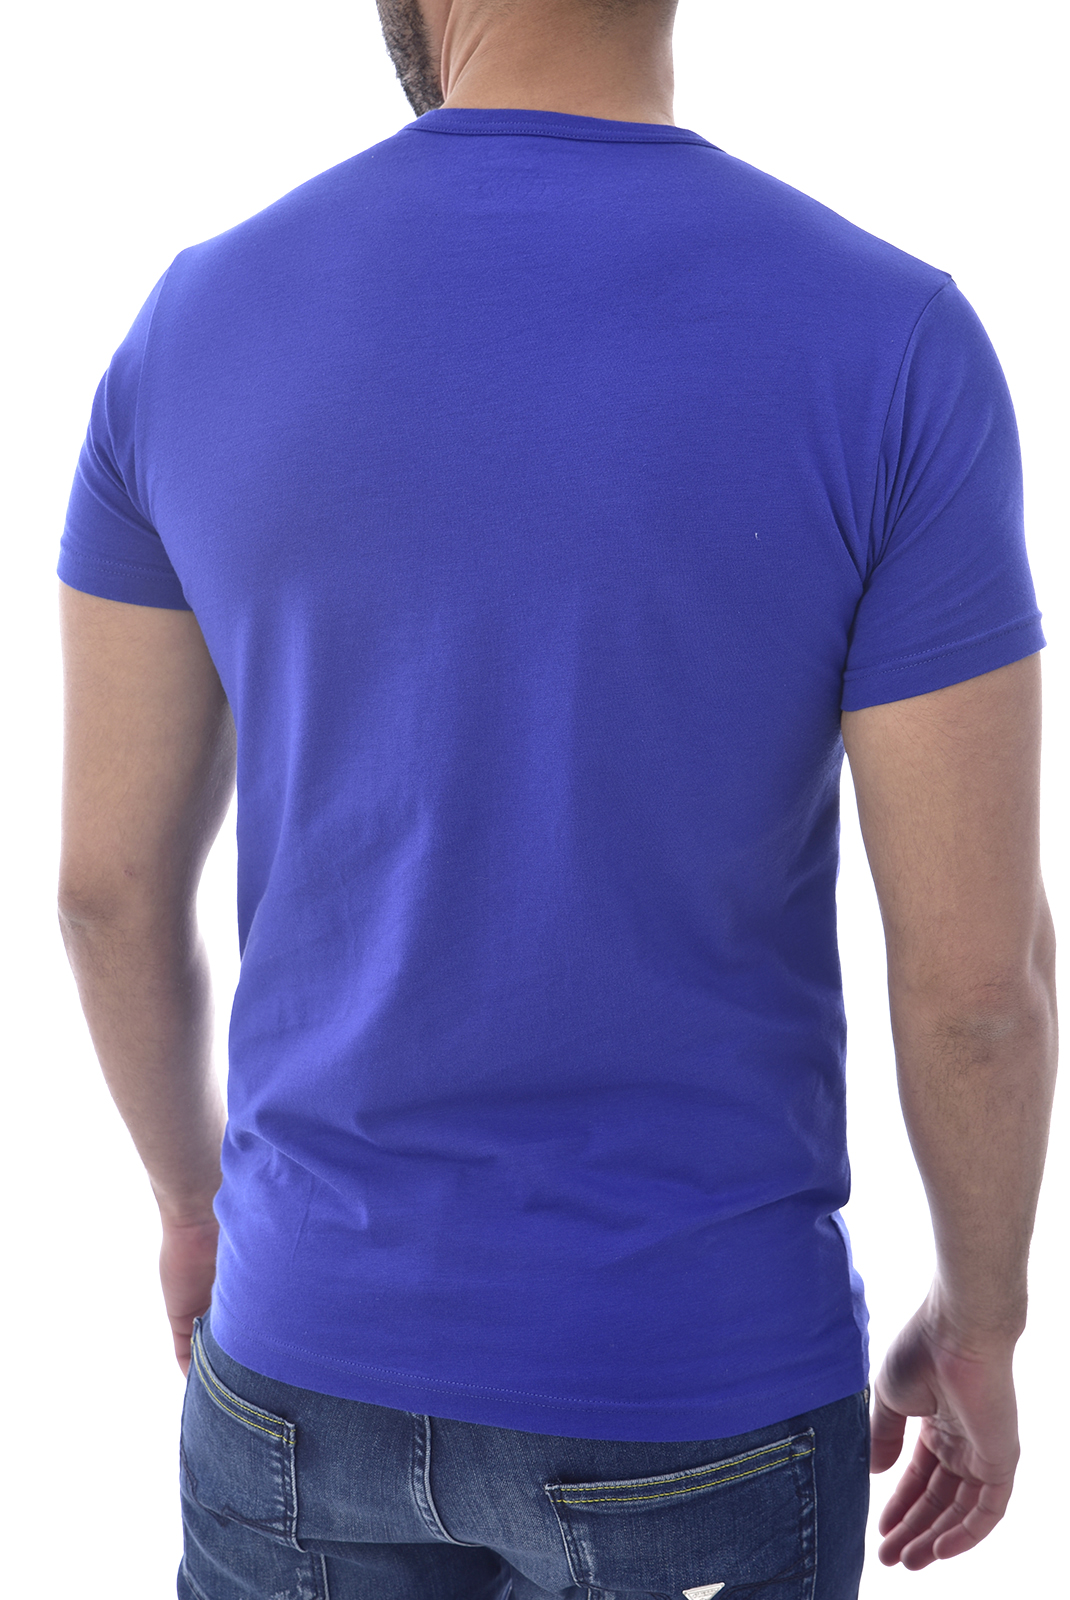 Tee-shirt Bleu Elet 111267 Cc715 Emporio Armani